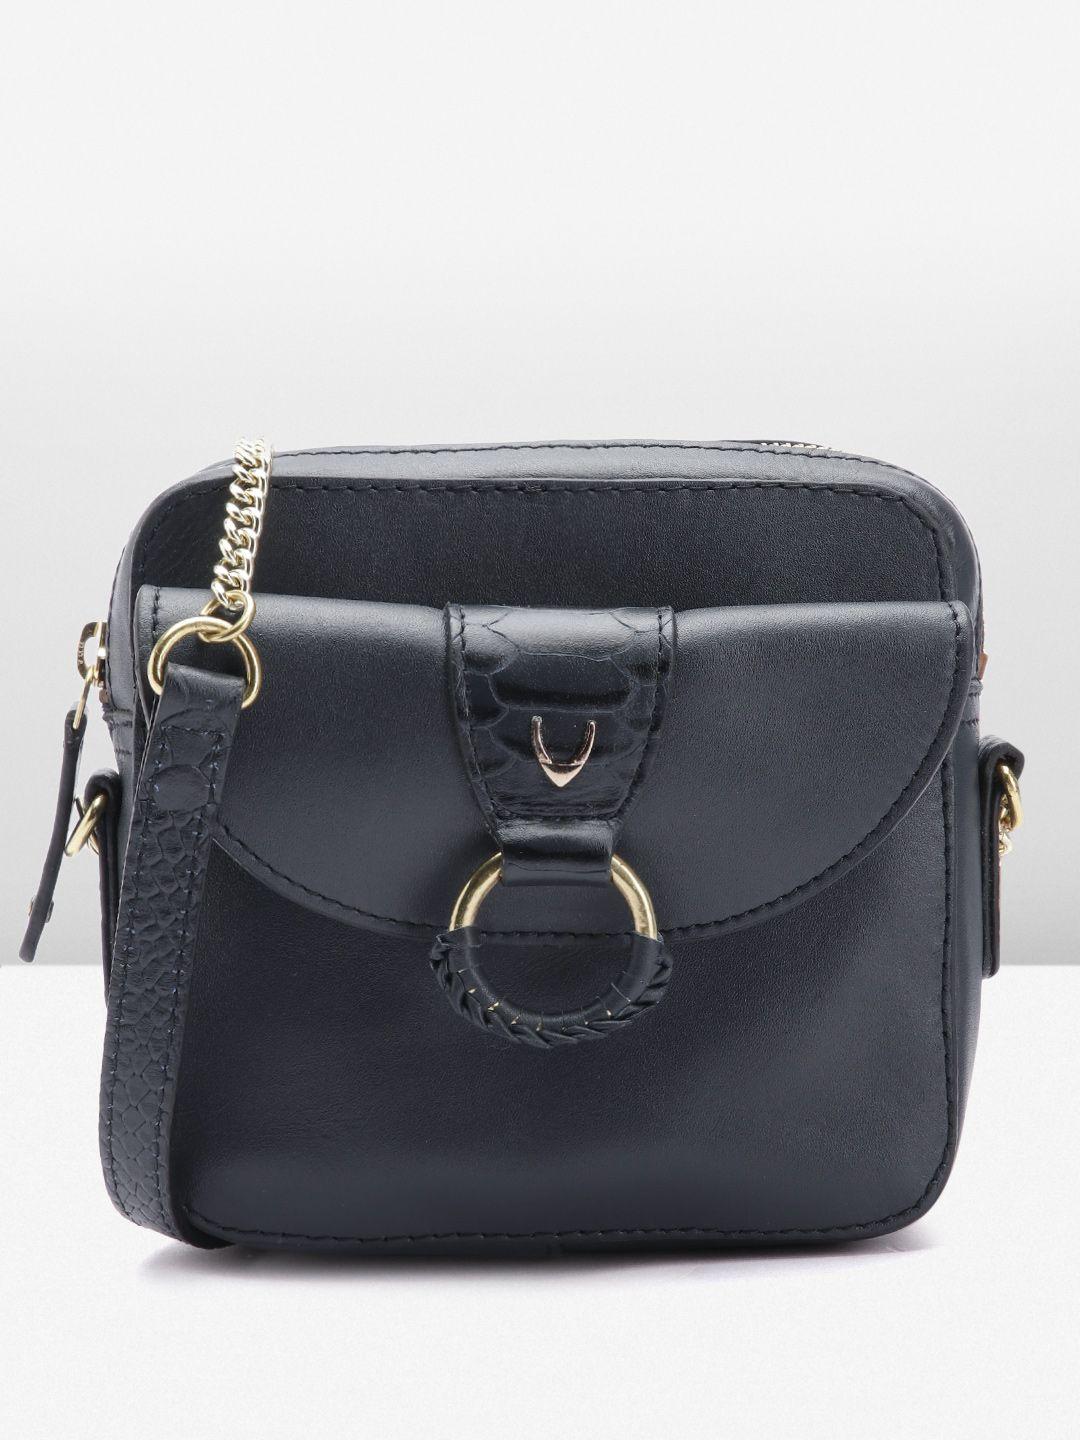 hidesign leather structured sling bag